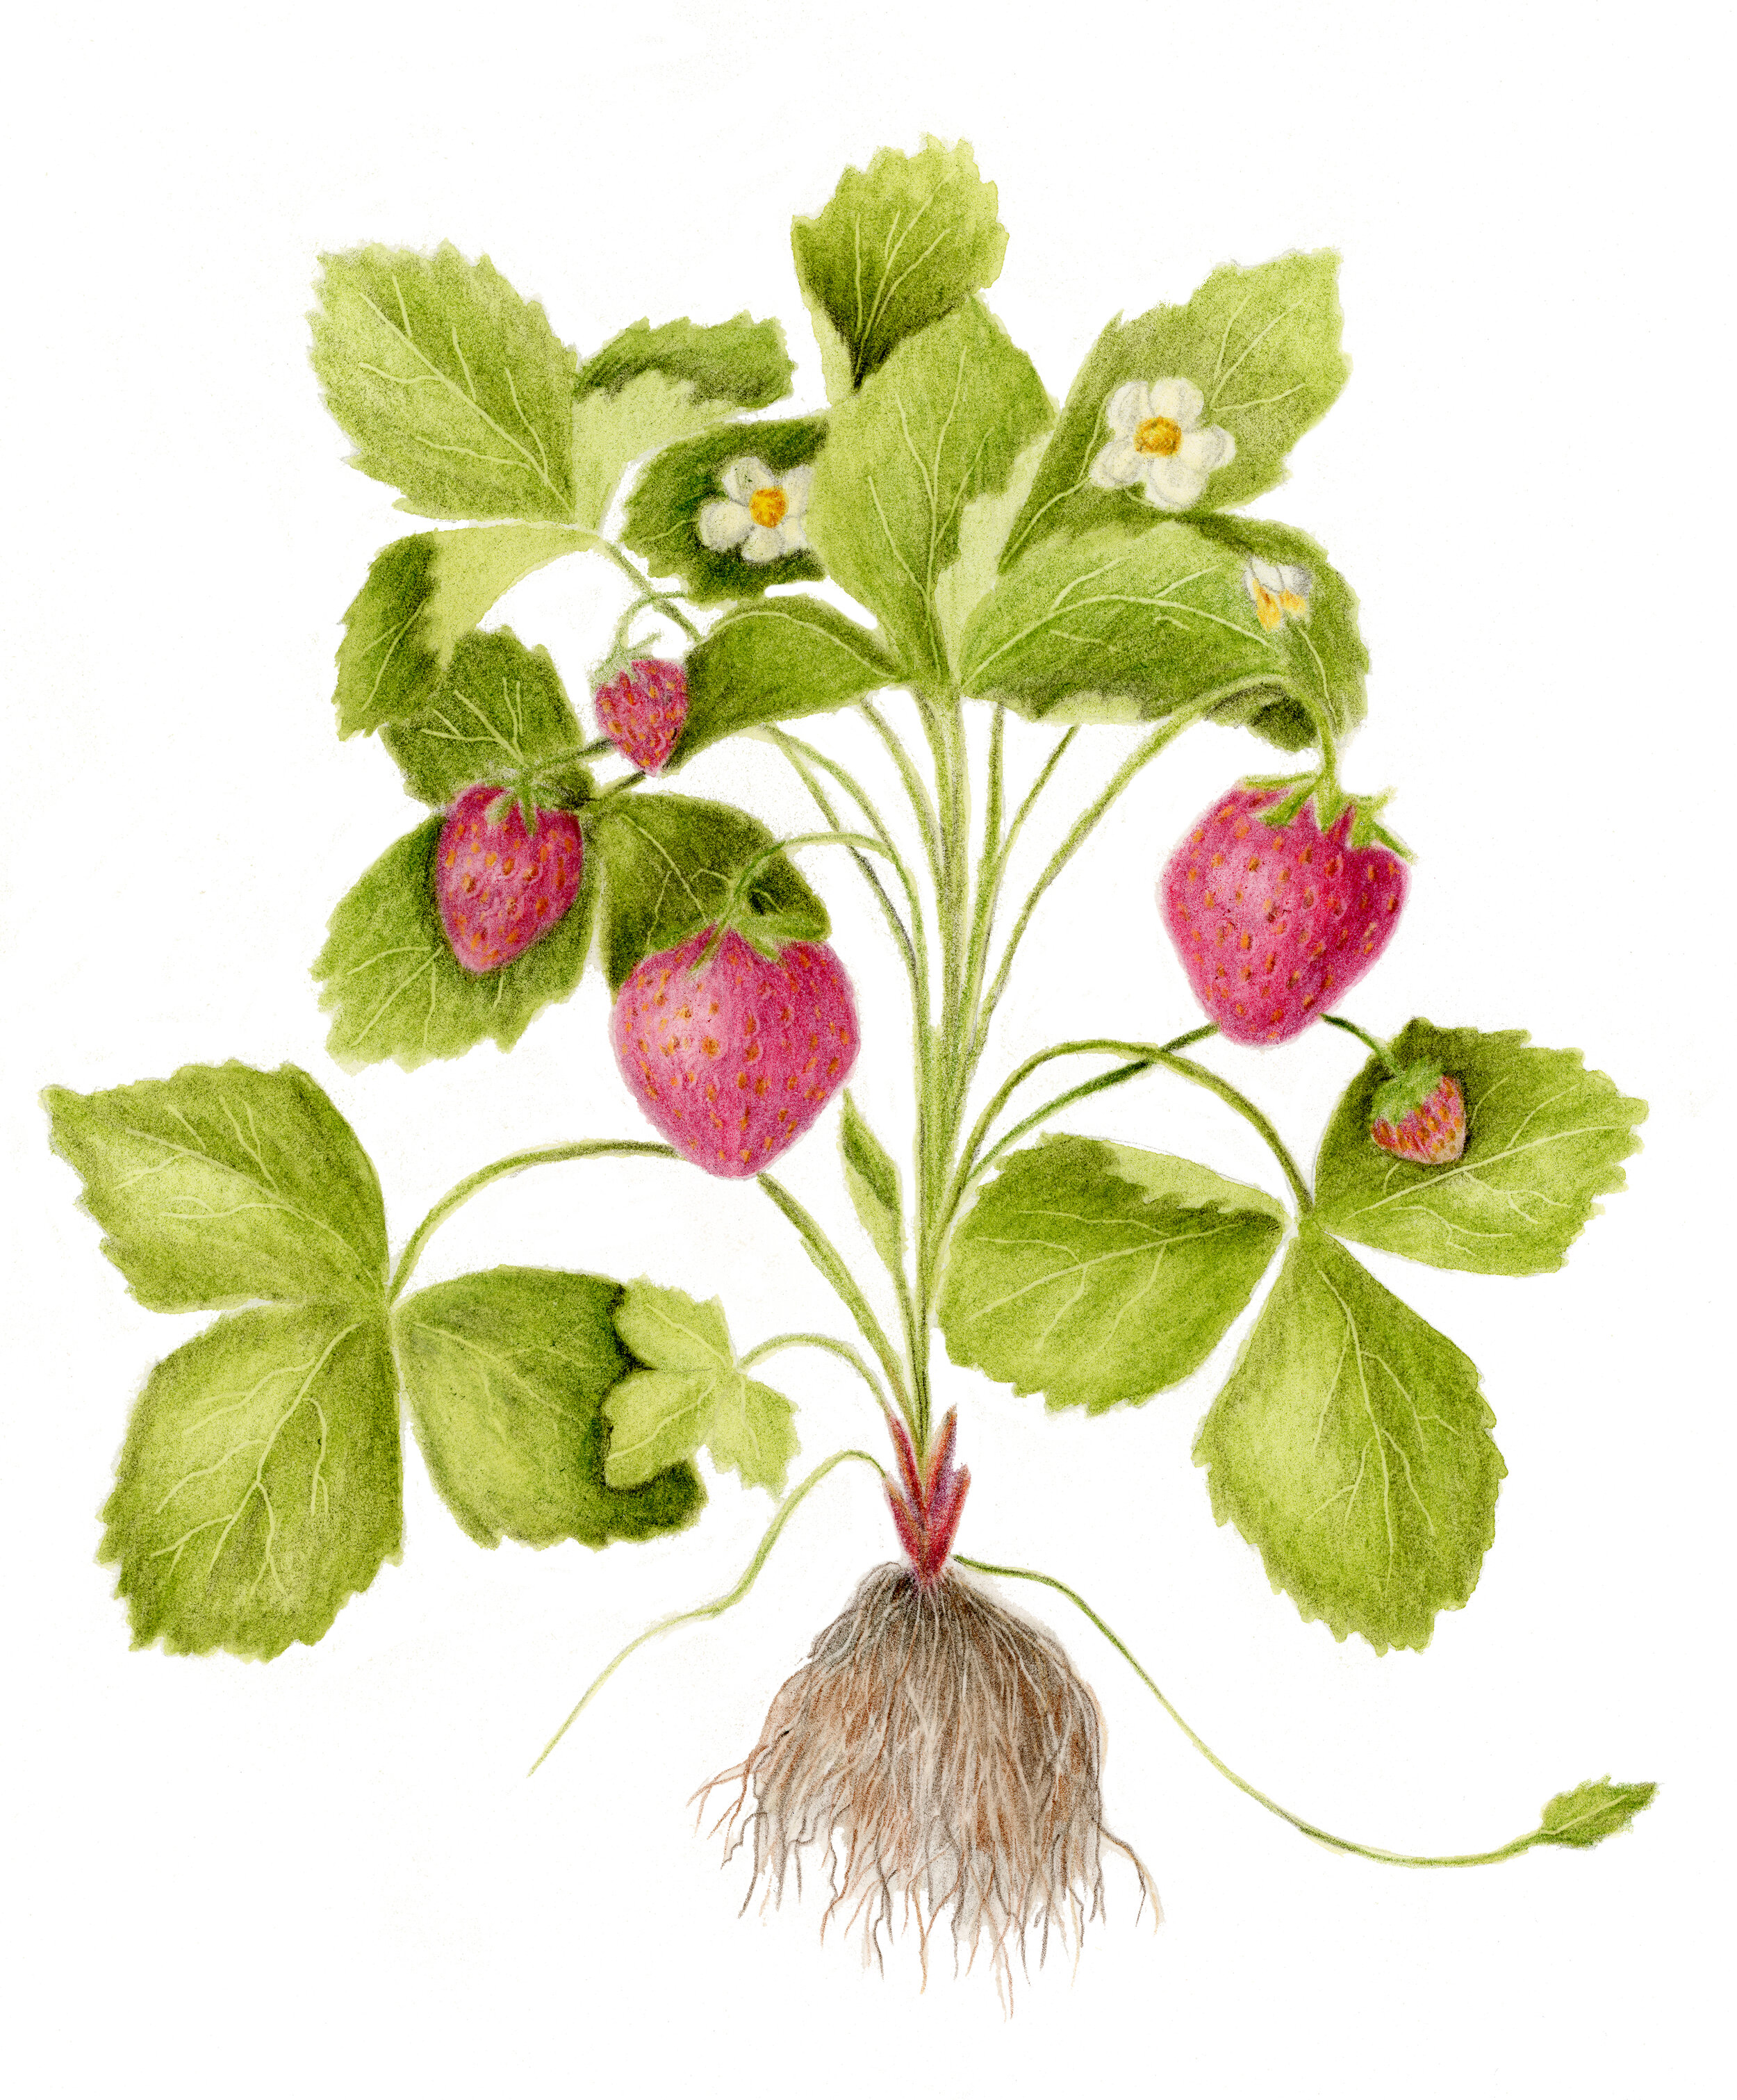 Strawberry  - Fragaria × ananassa